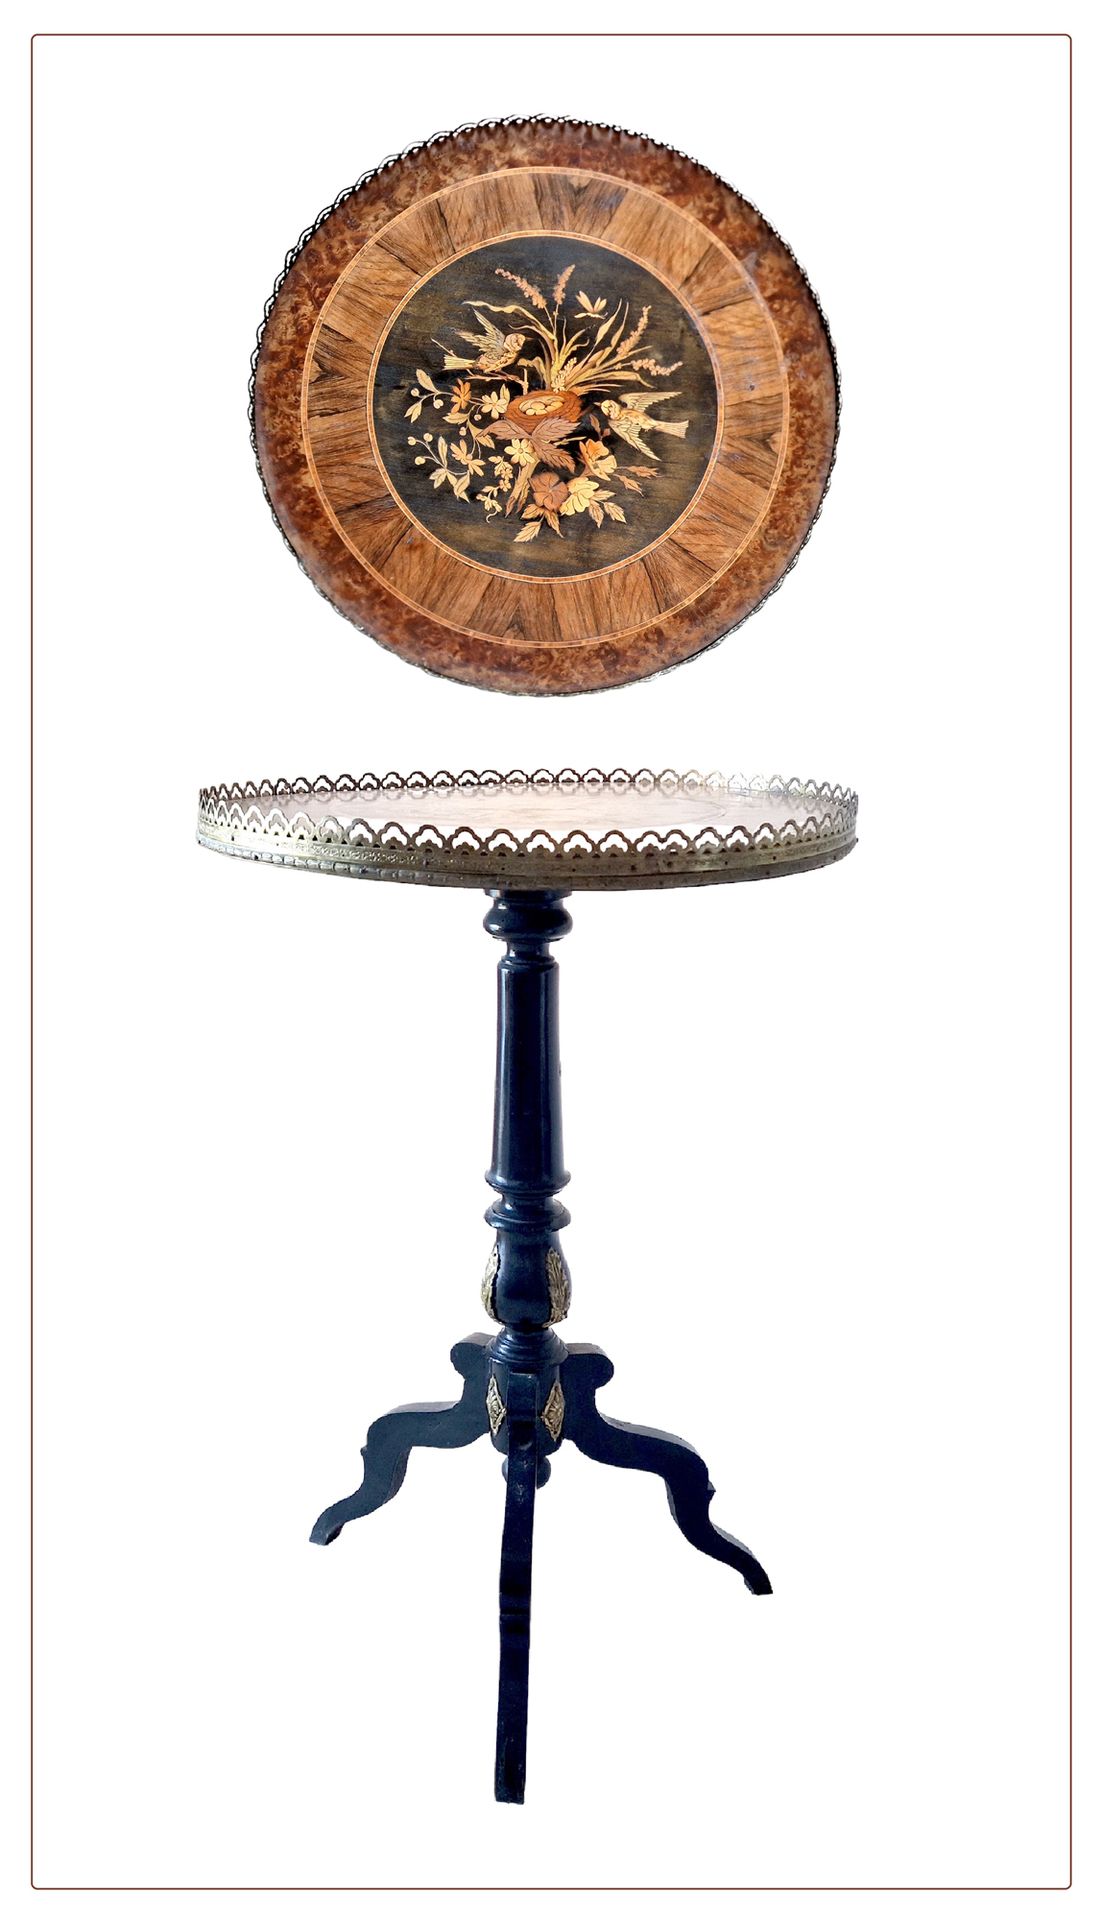 FRANCE, D'EPOQUE NAPOLEON III 优雅的基座桌



三角架，用发黑的木头，摇晃的顶部用紫檀木镶嵌，中心是鸟和叶子的装饰，周围是镀金的&hellip;